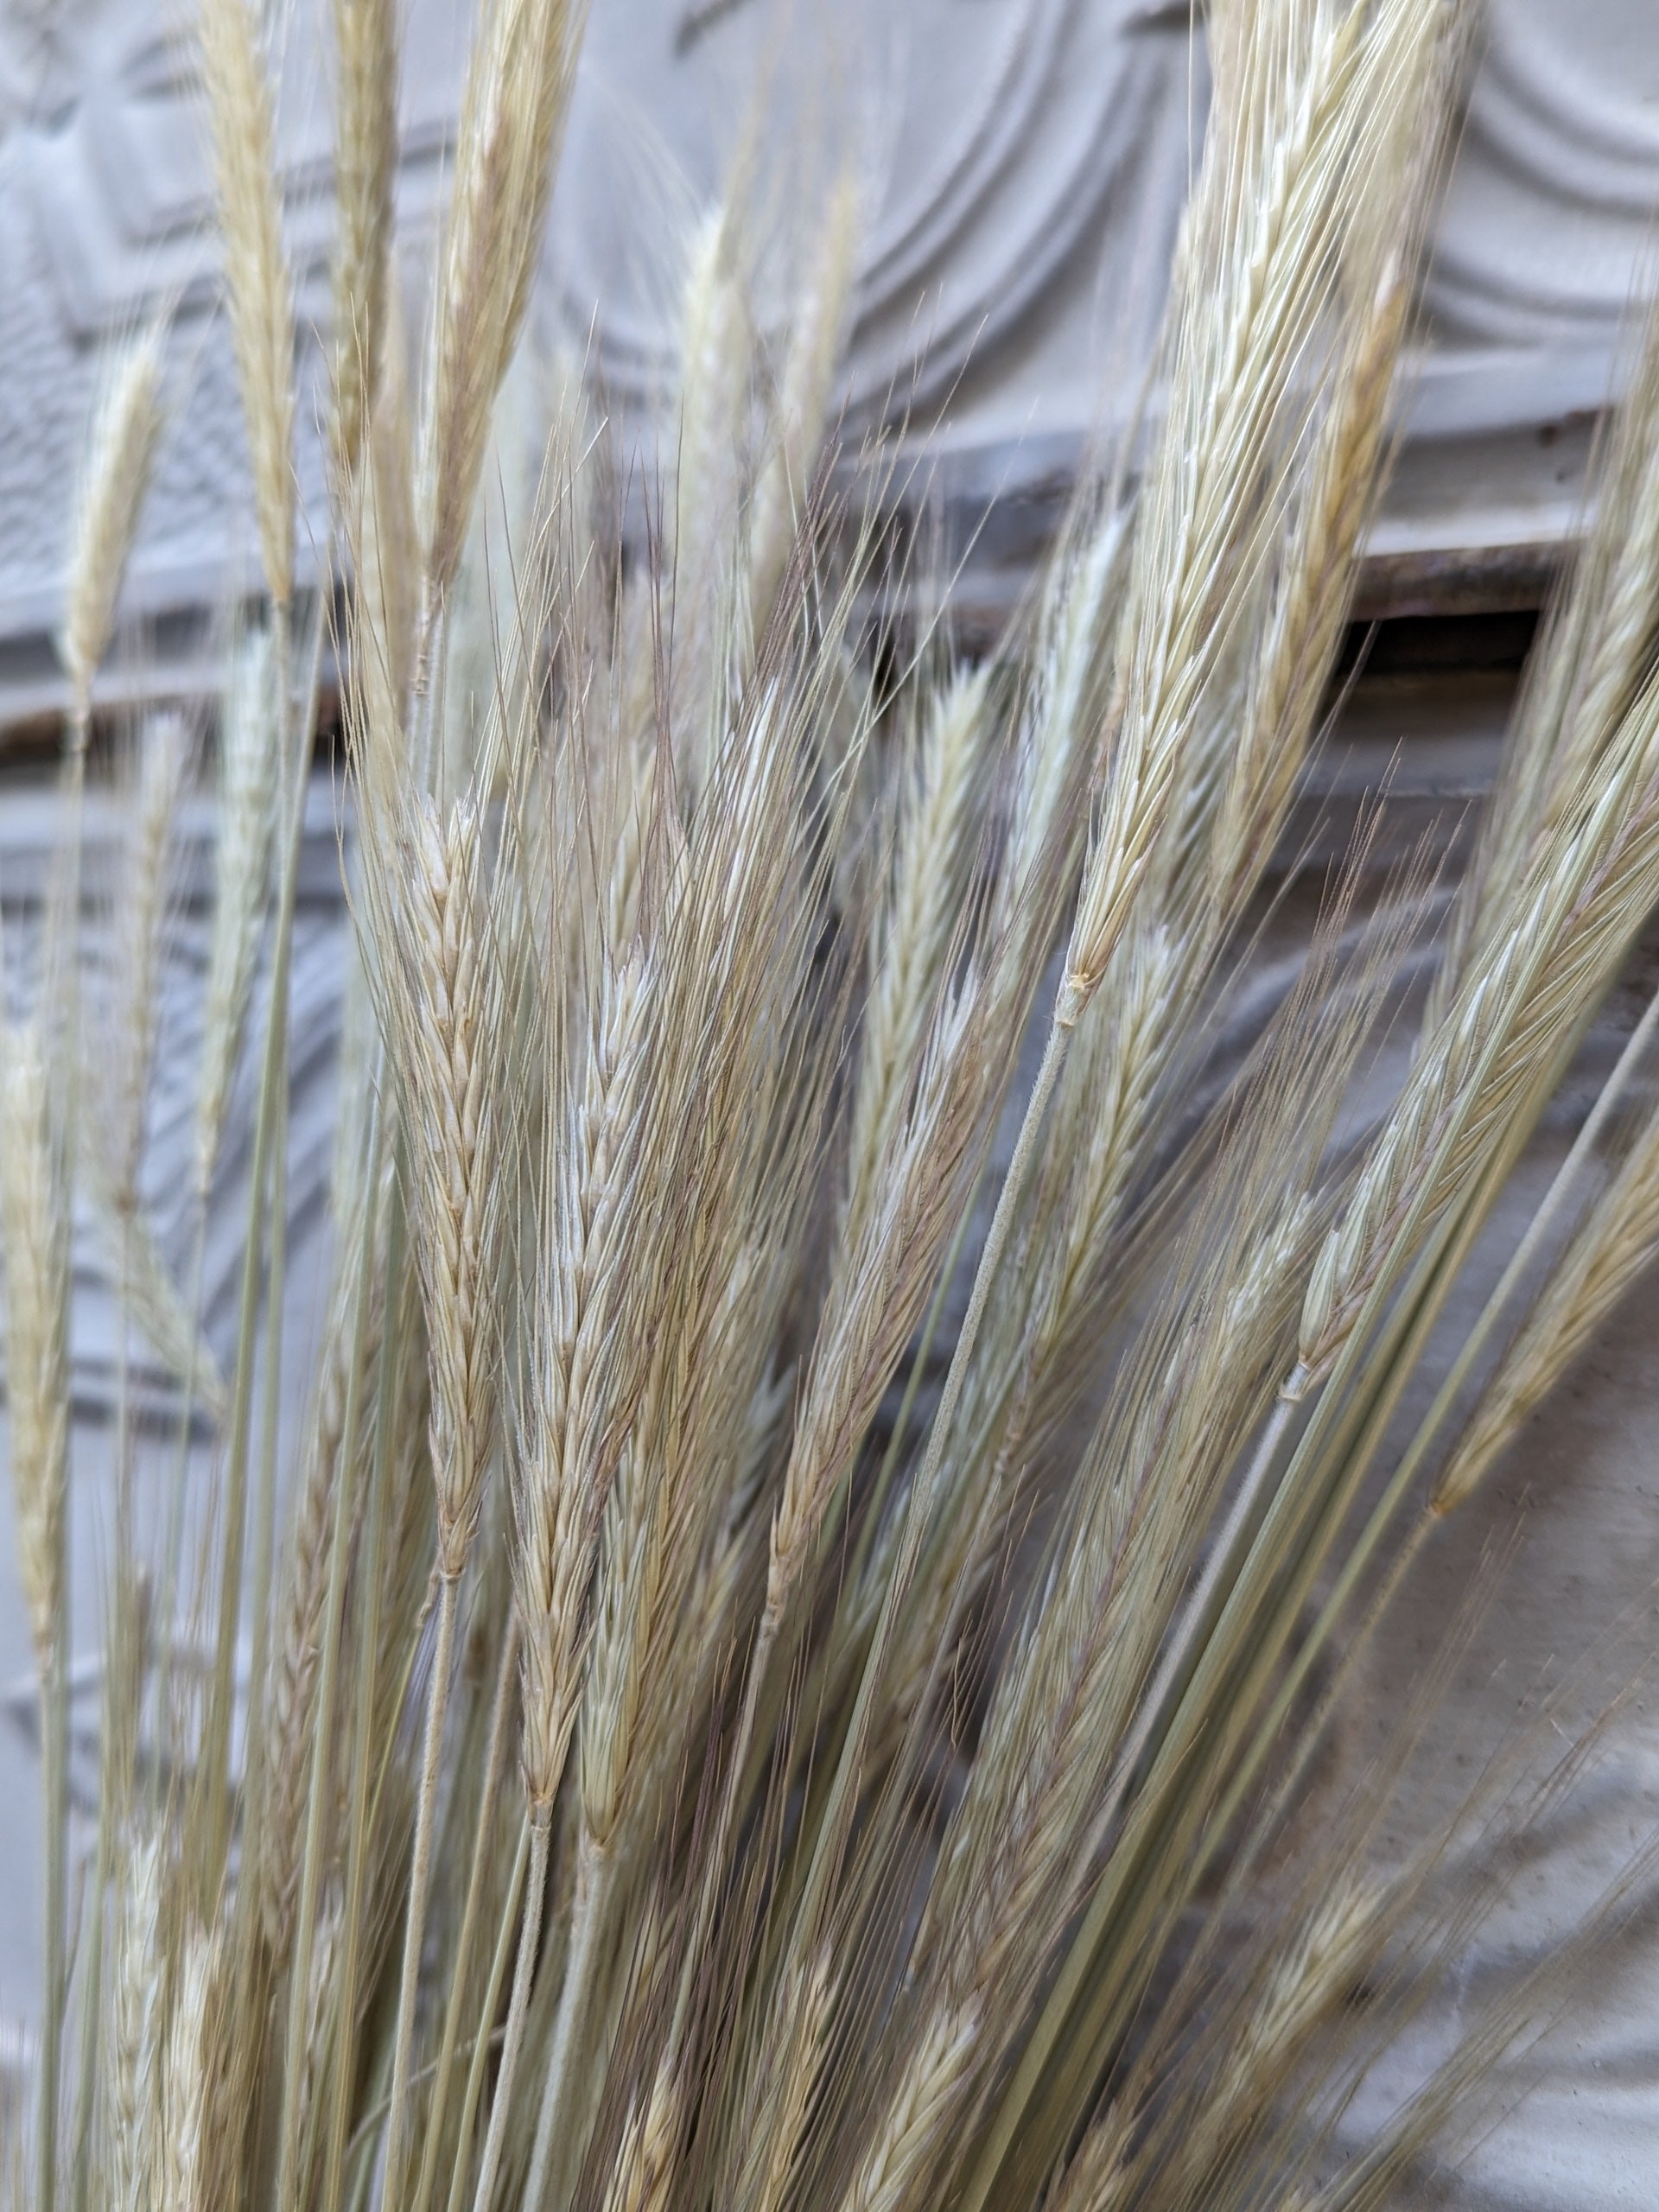 Dried Grains-Rye/Wheat